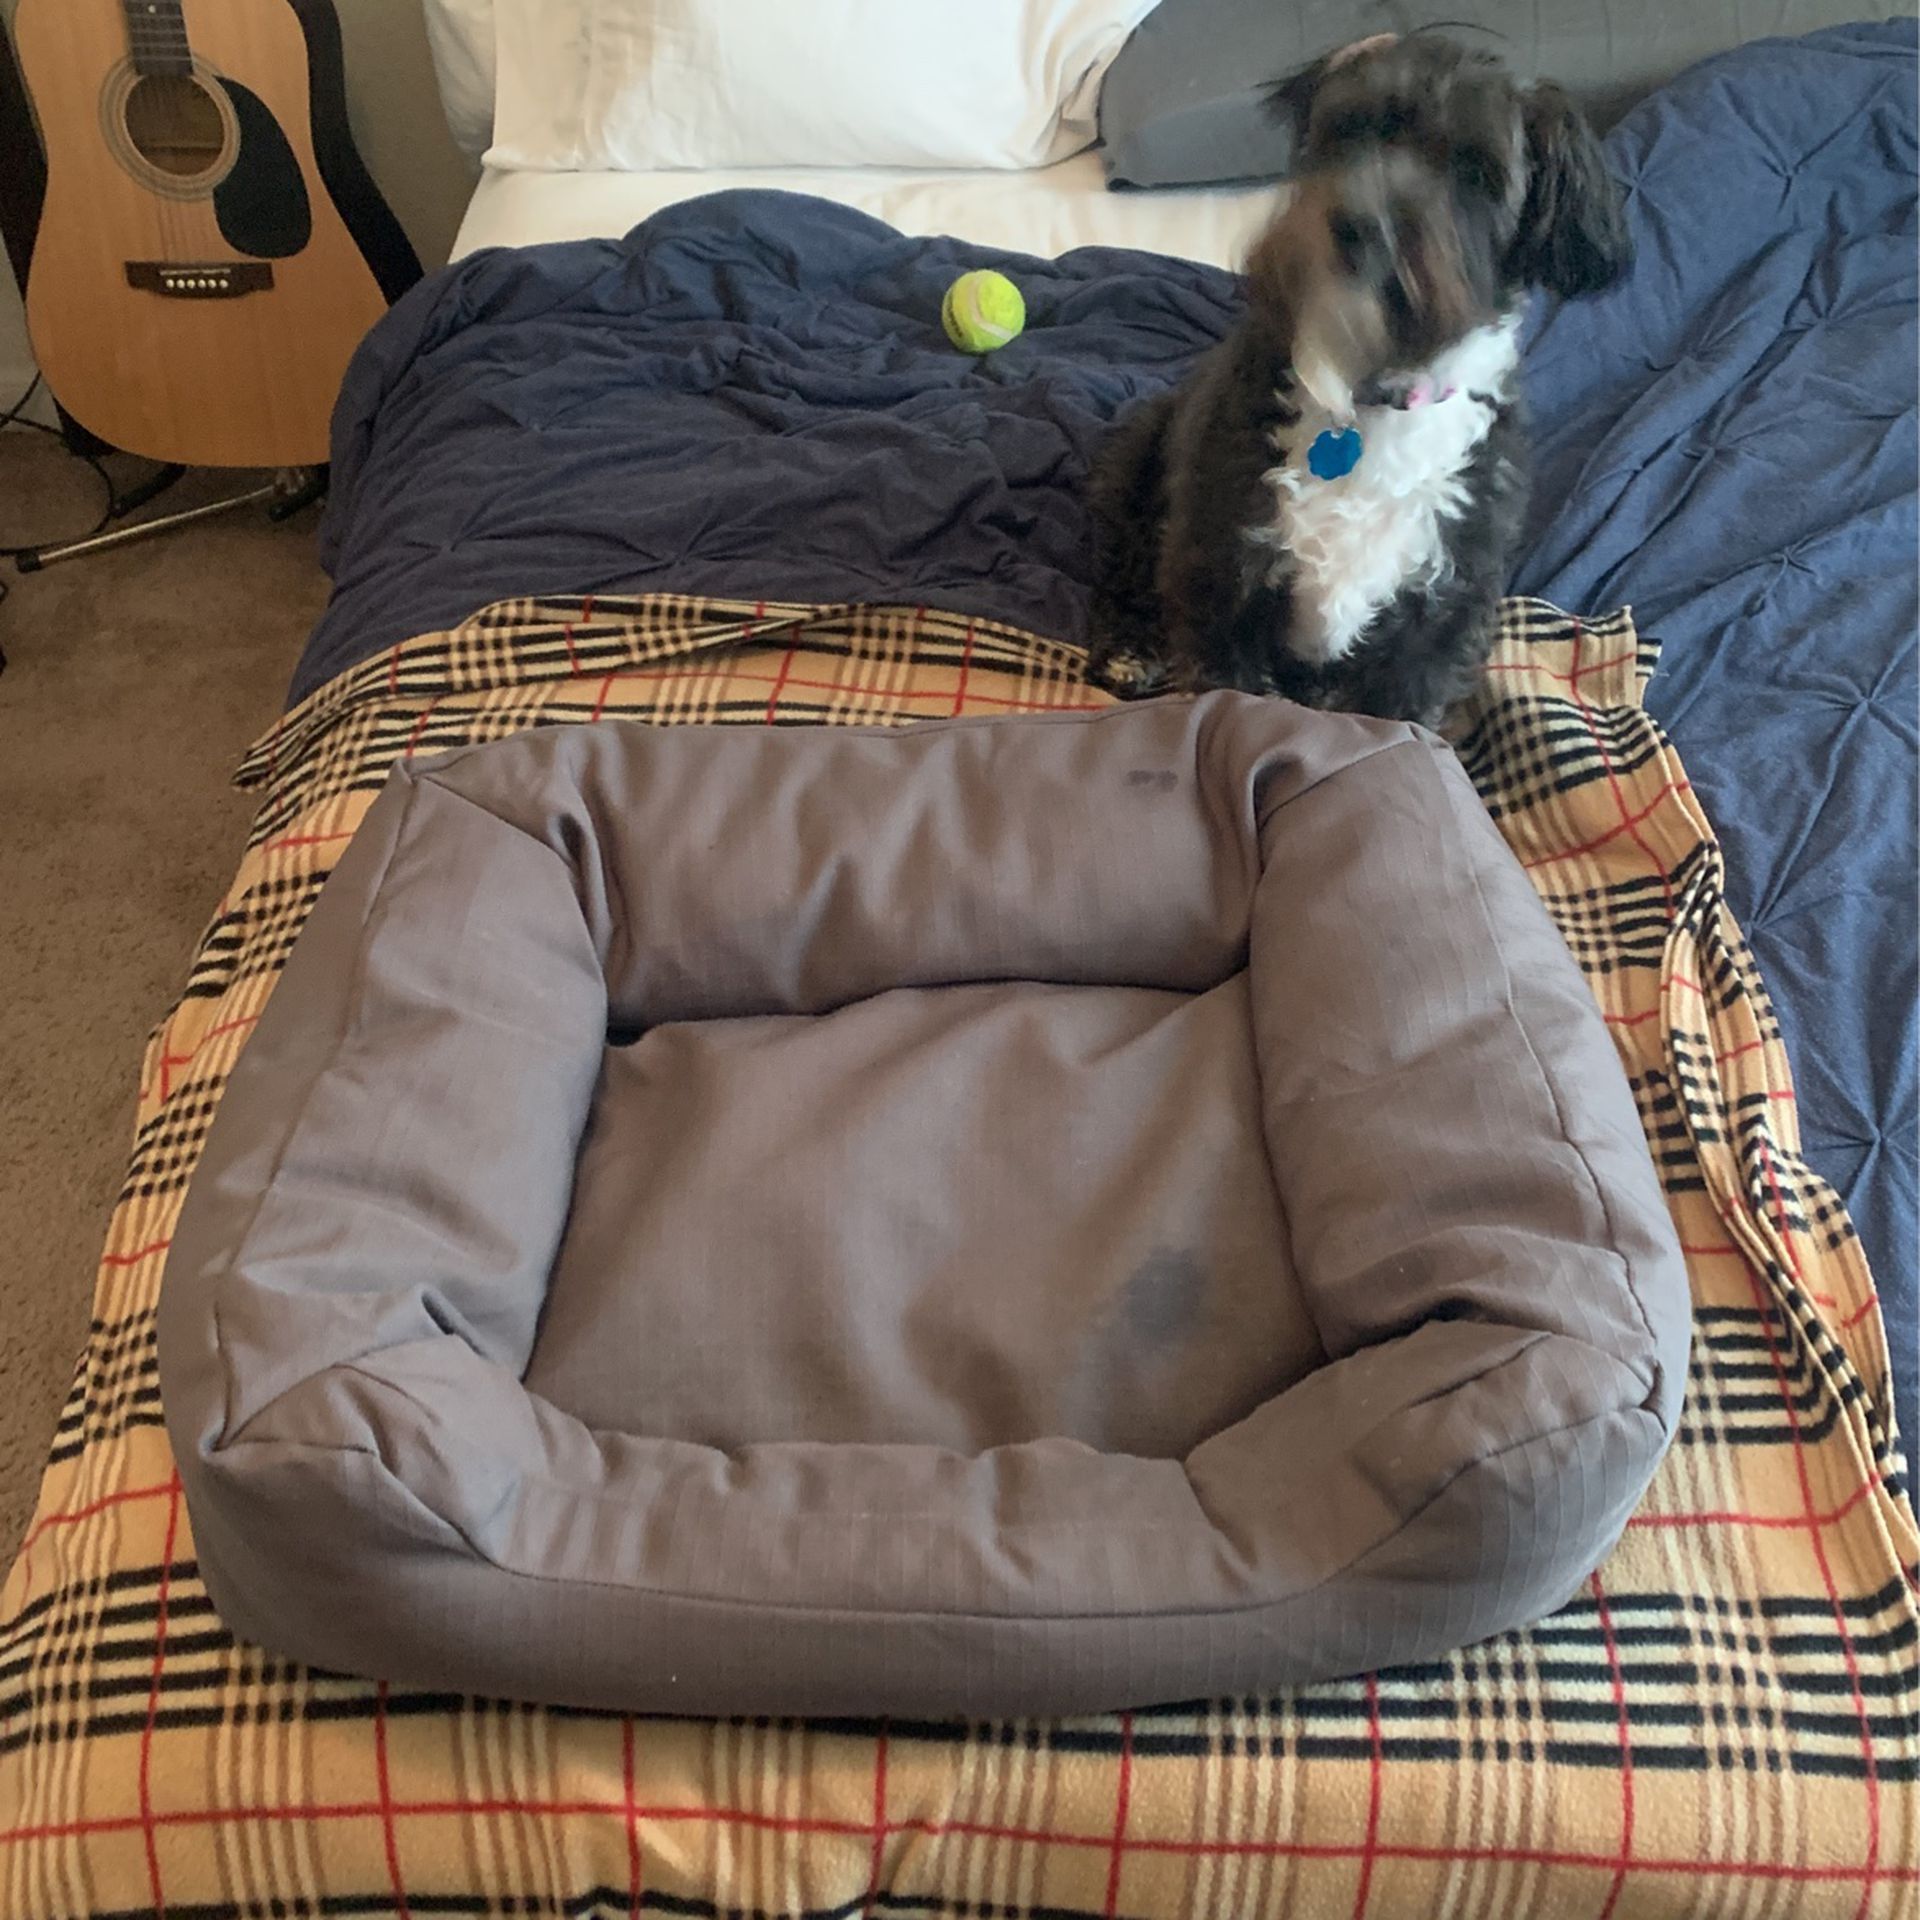 Dog Bed